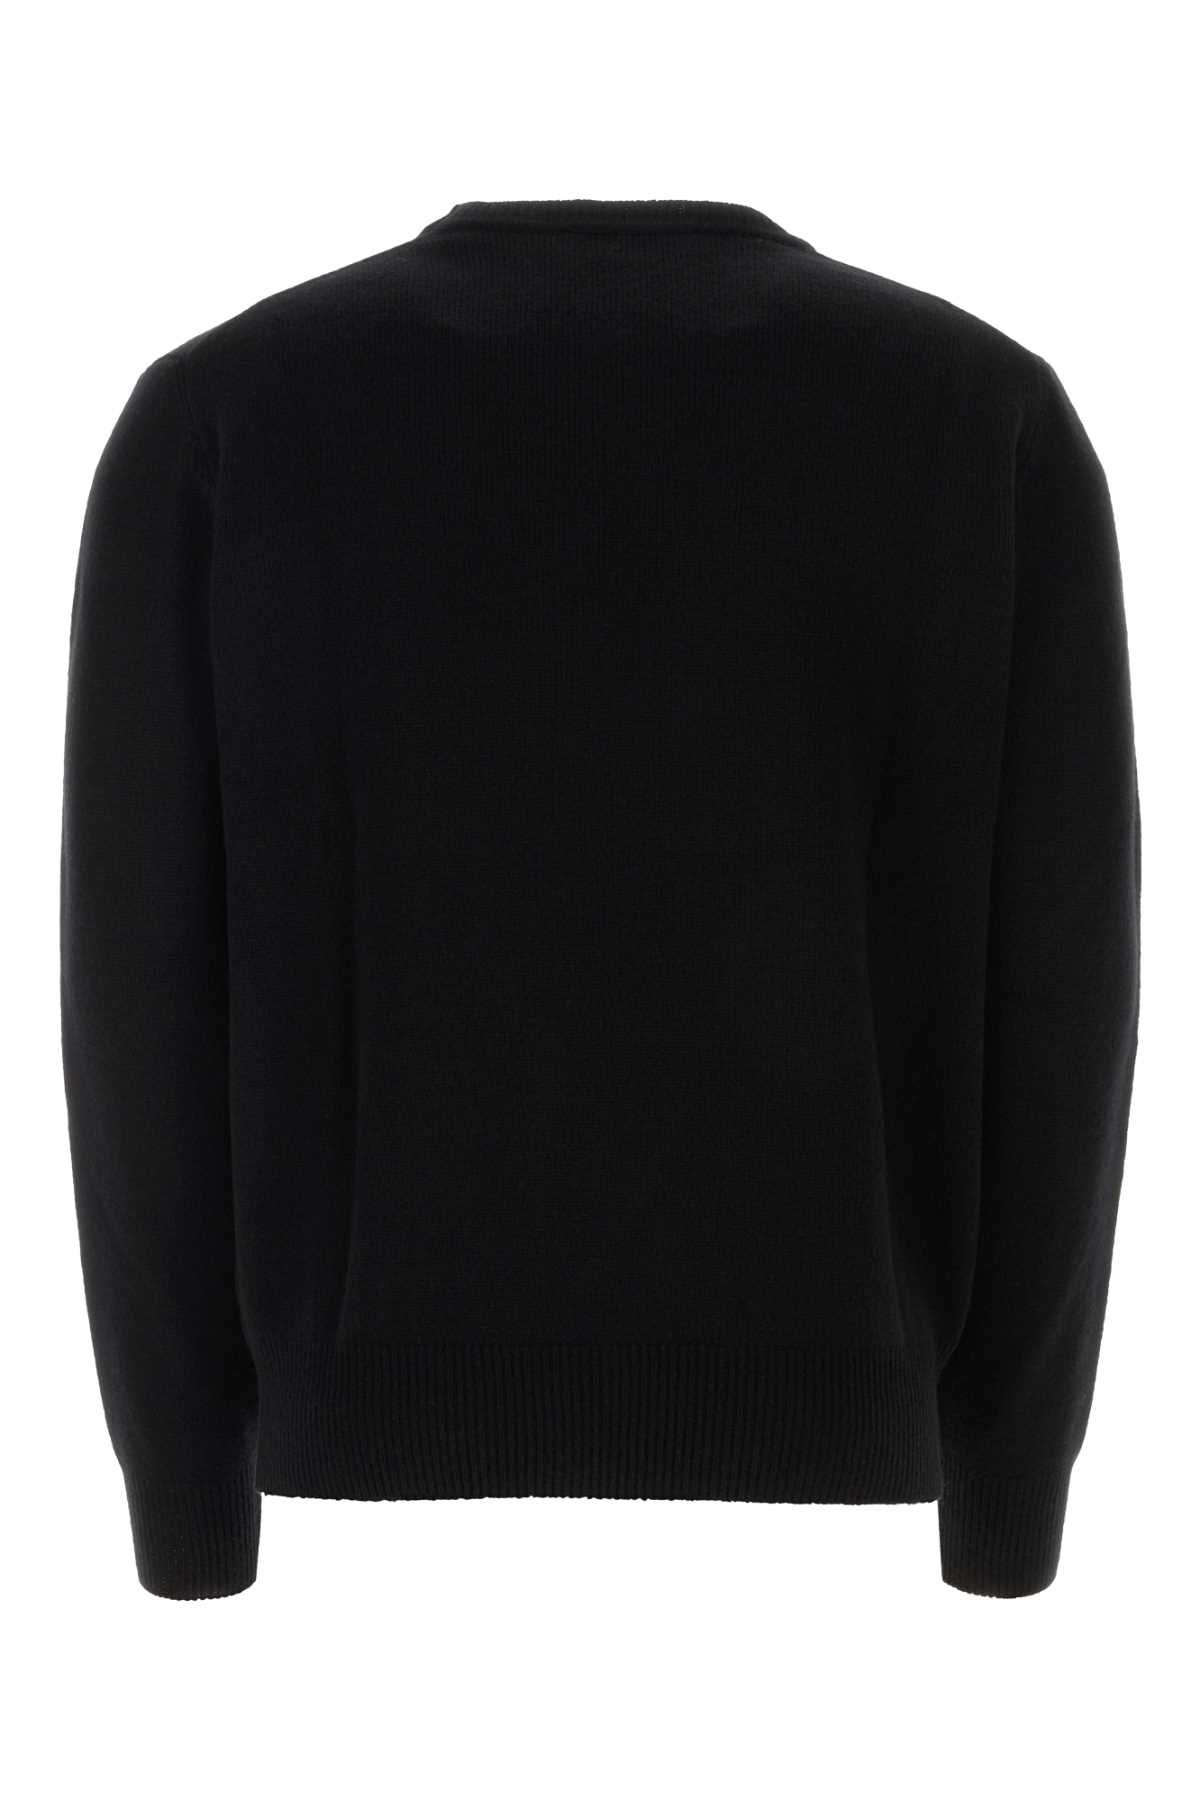 Vivienne Westwood Black Wool Blend Alex Sweater